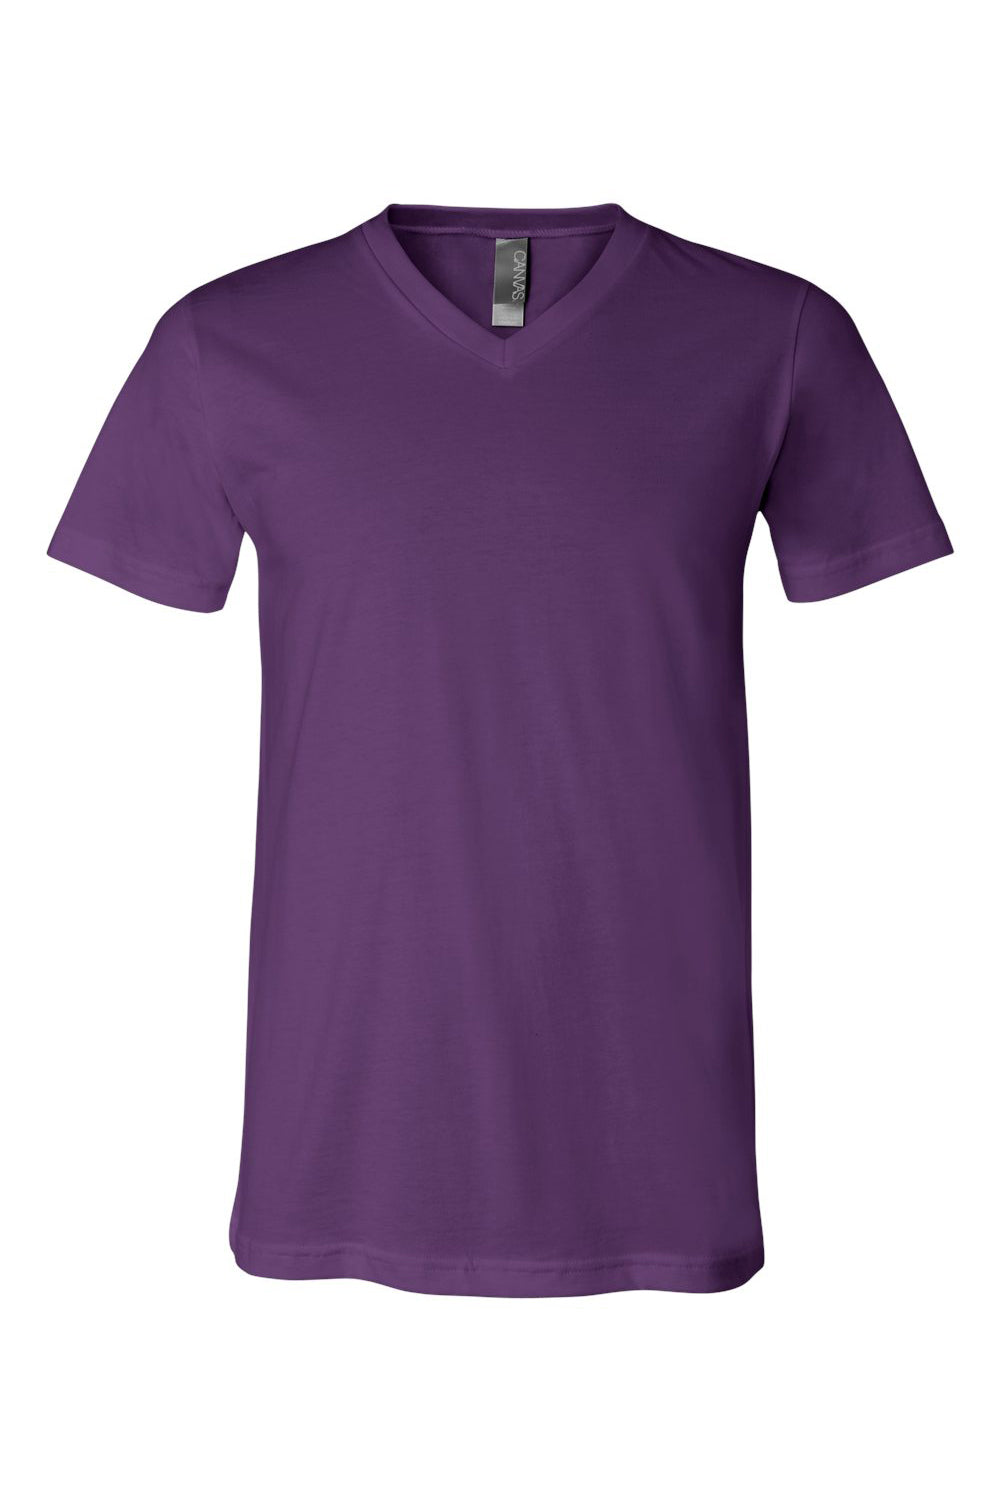 Bella + Canvas BC3005/3005/3655C Mens Jersey Short Sleeve V-Neck T-Shirt Team Purple Flat Front